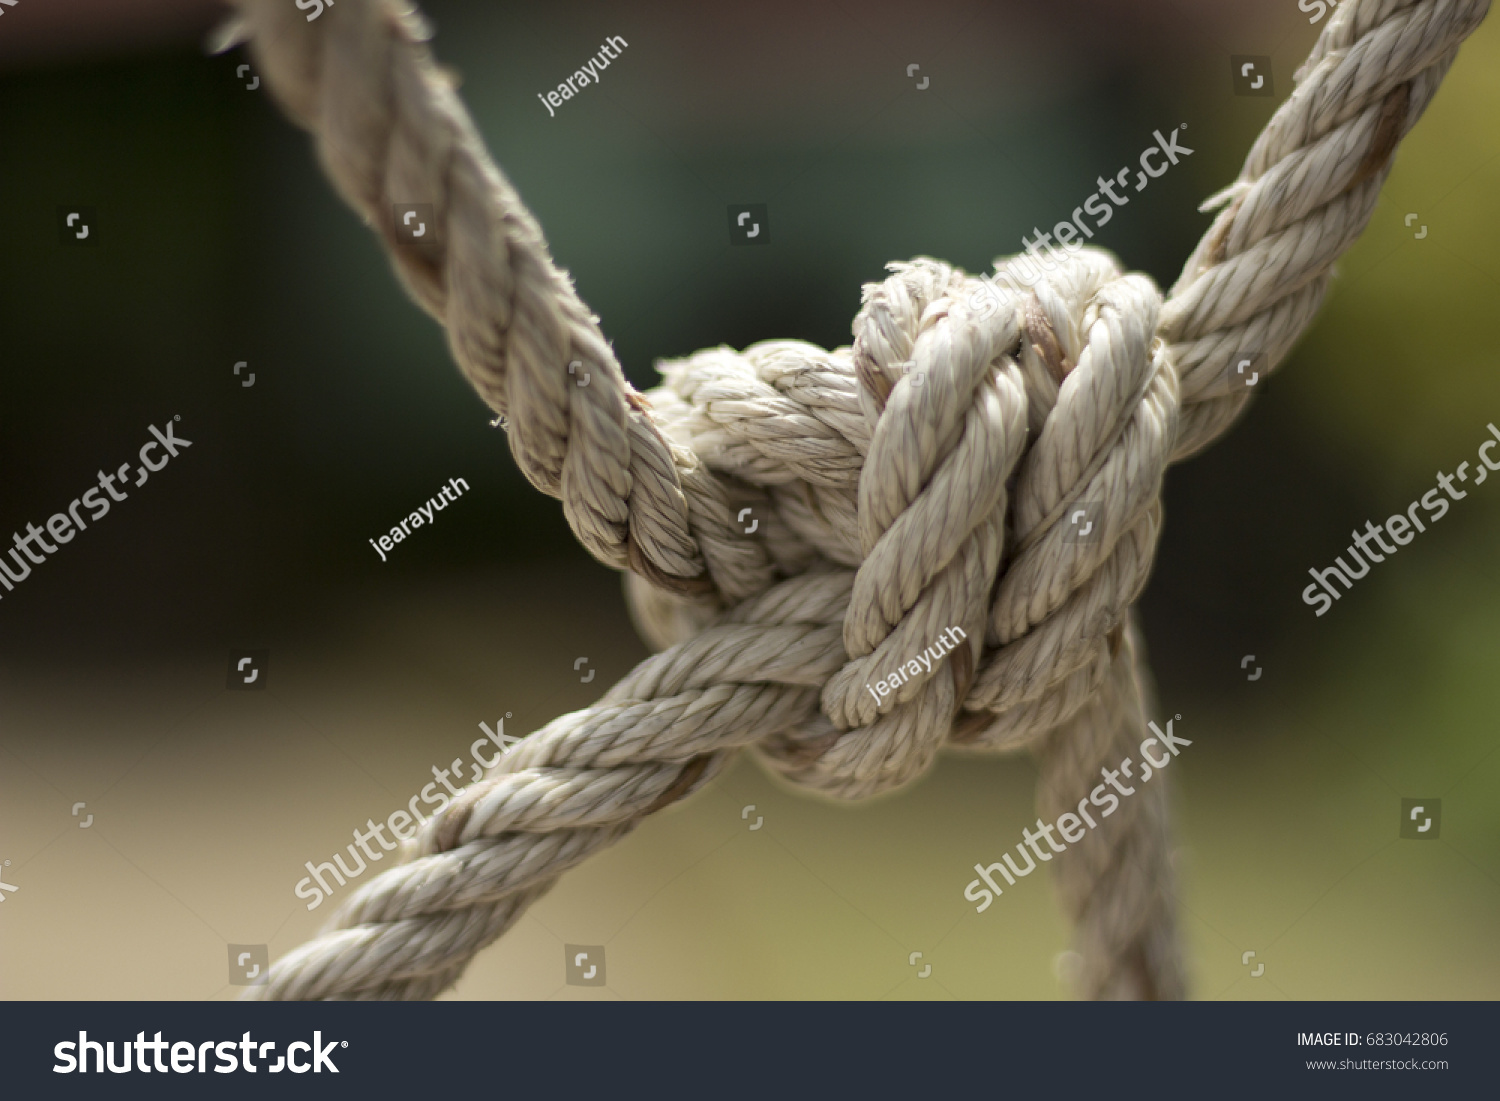 Knitting rope #683042806